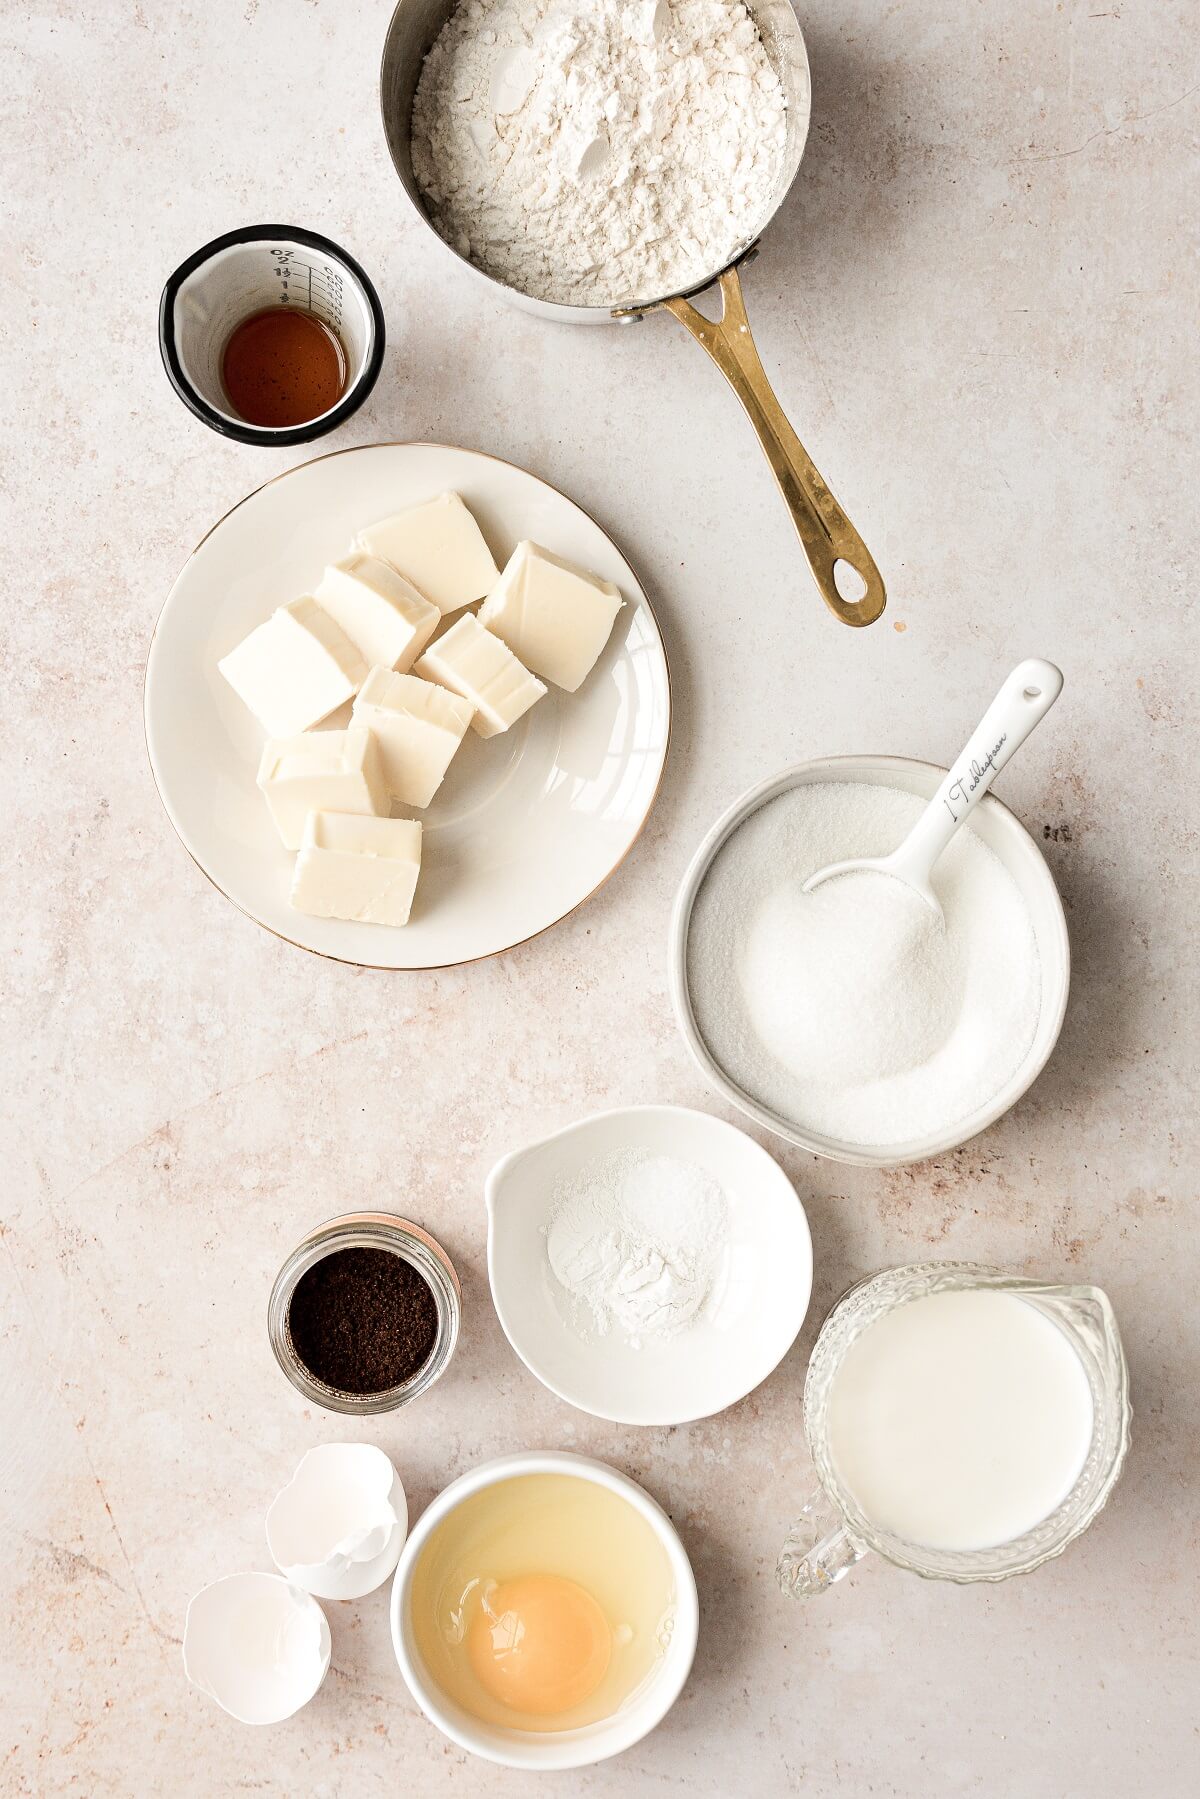 Ingredients for making baked vanilla cake doughnuts.